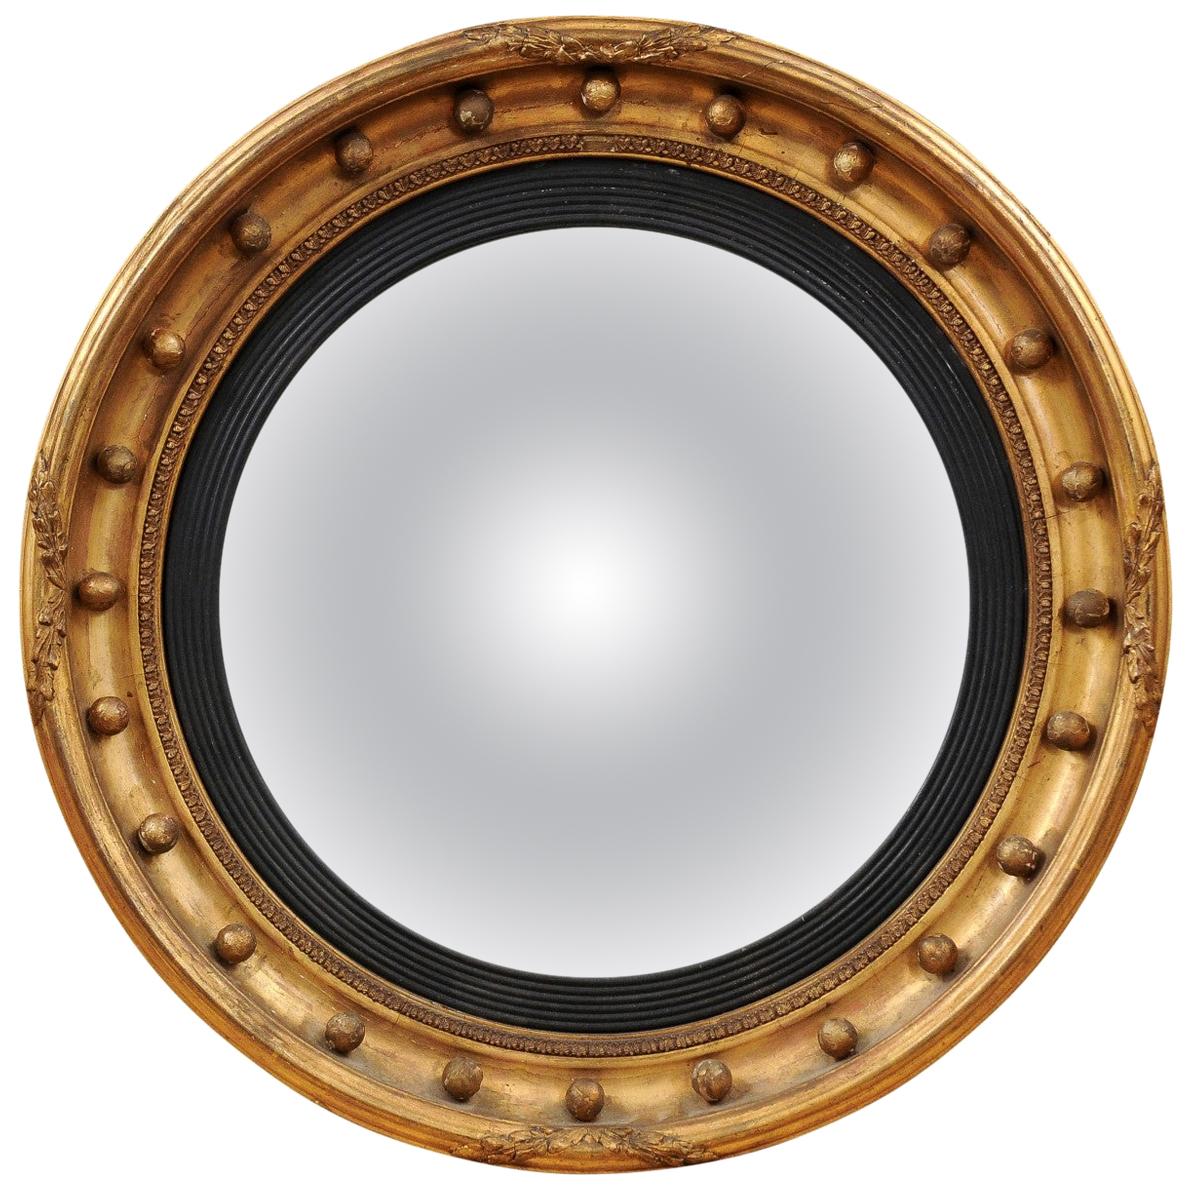 19th Century English Giltwood Bulls-Eye Convex Mirror